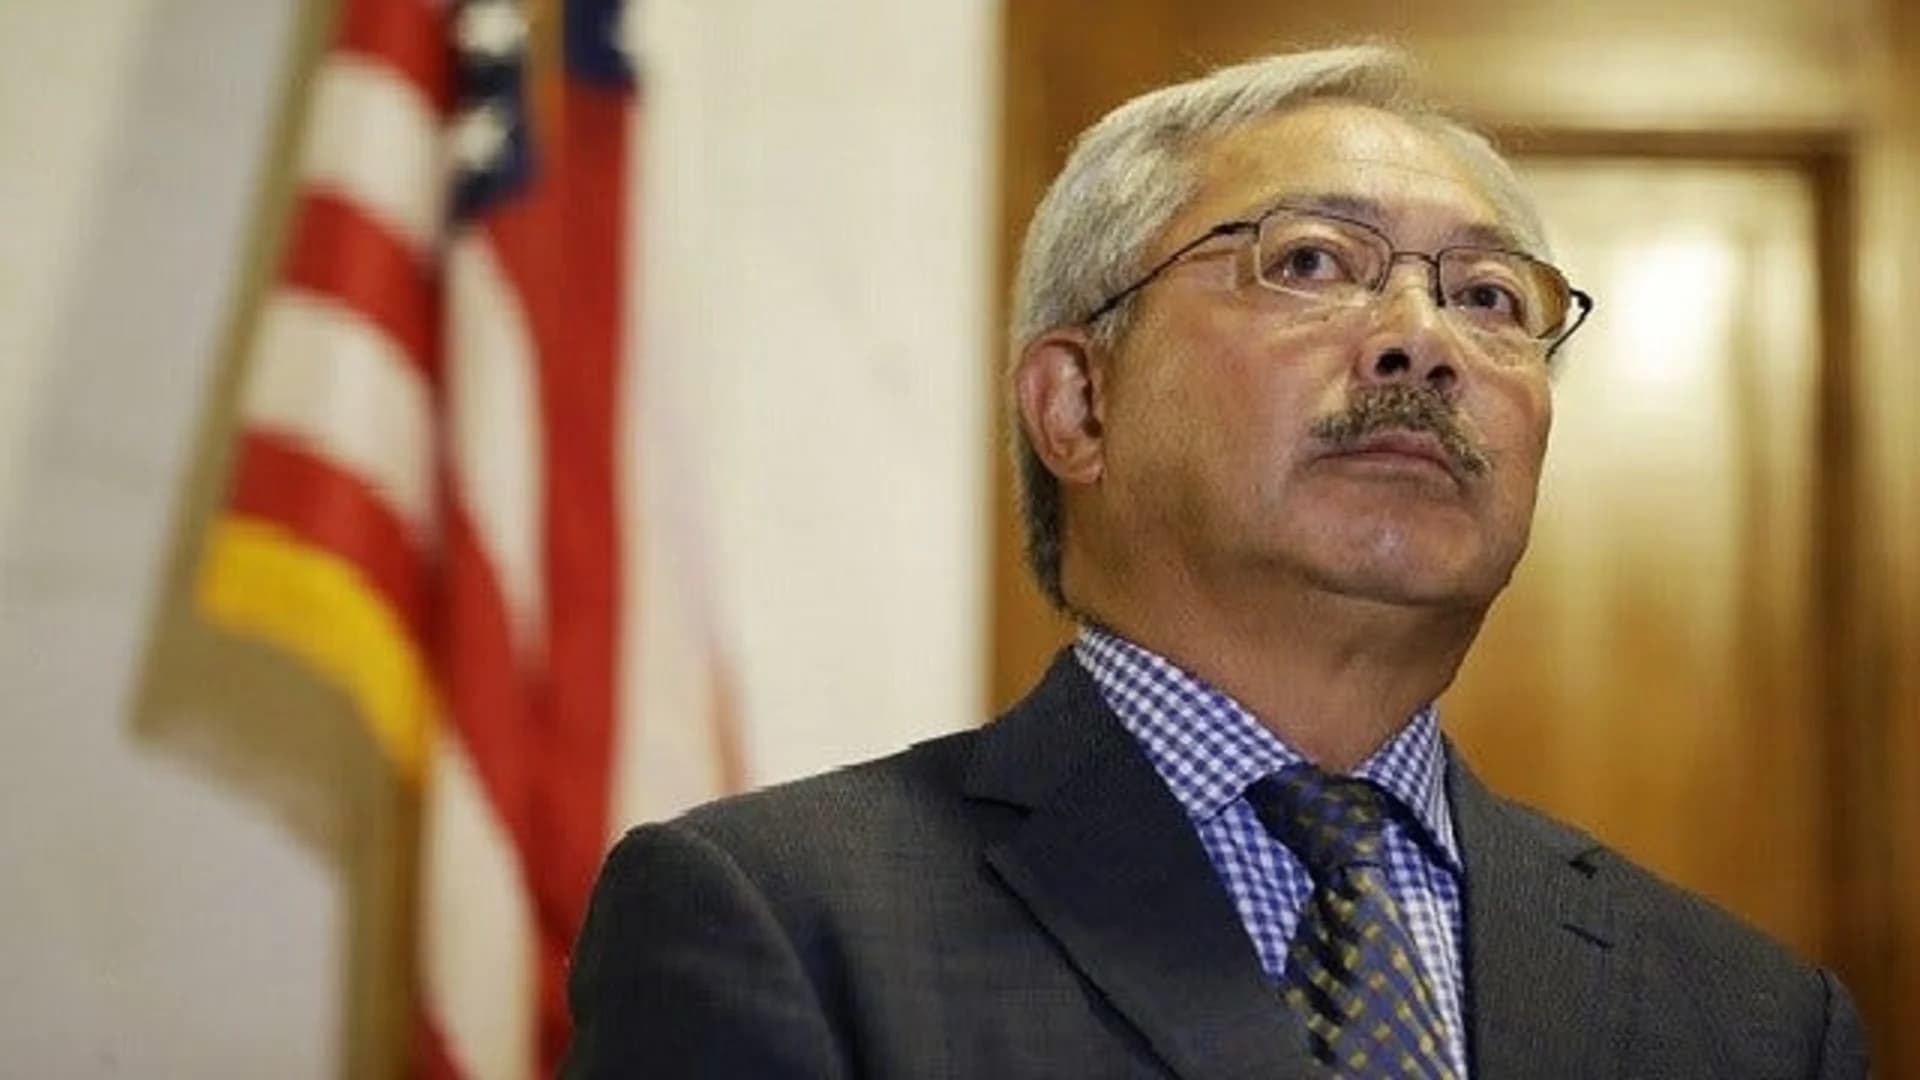 San Francisco Mayor Ed Lee dies suddenly at 65